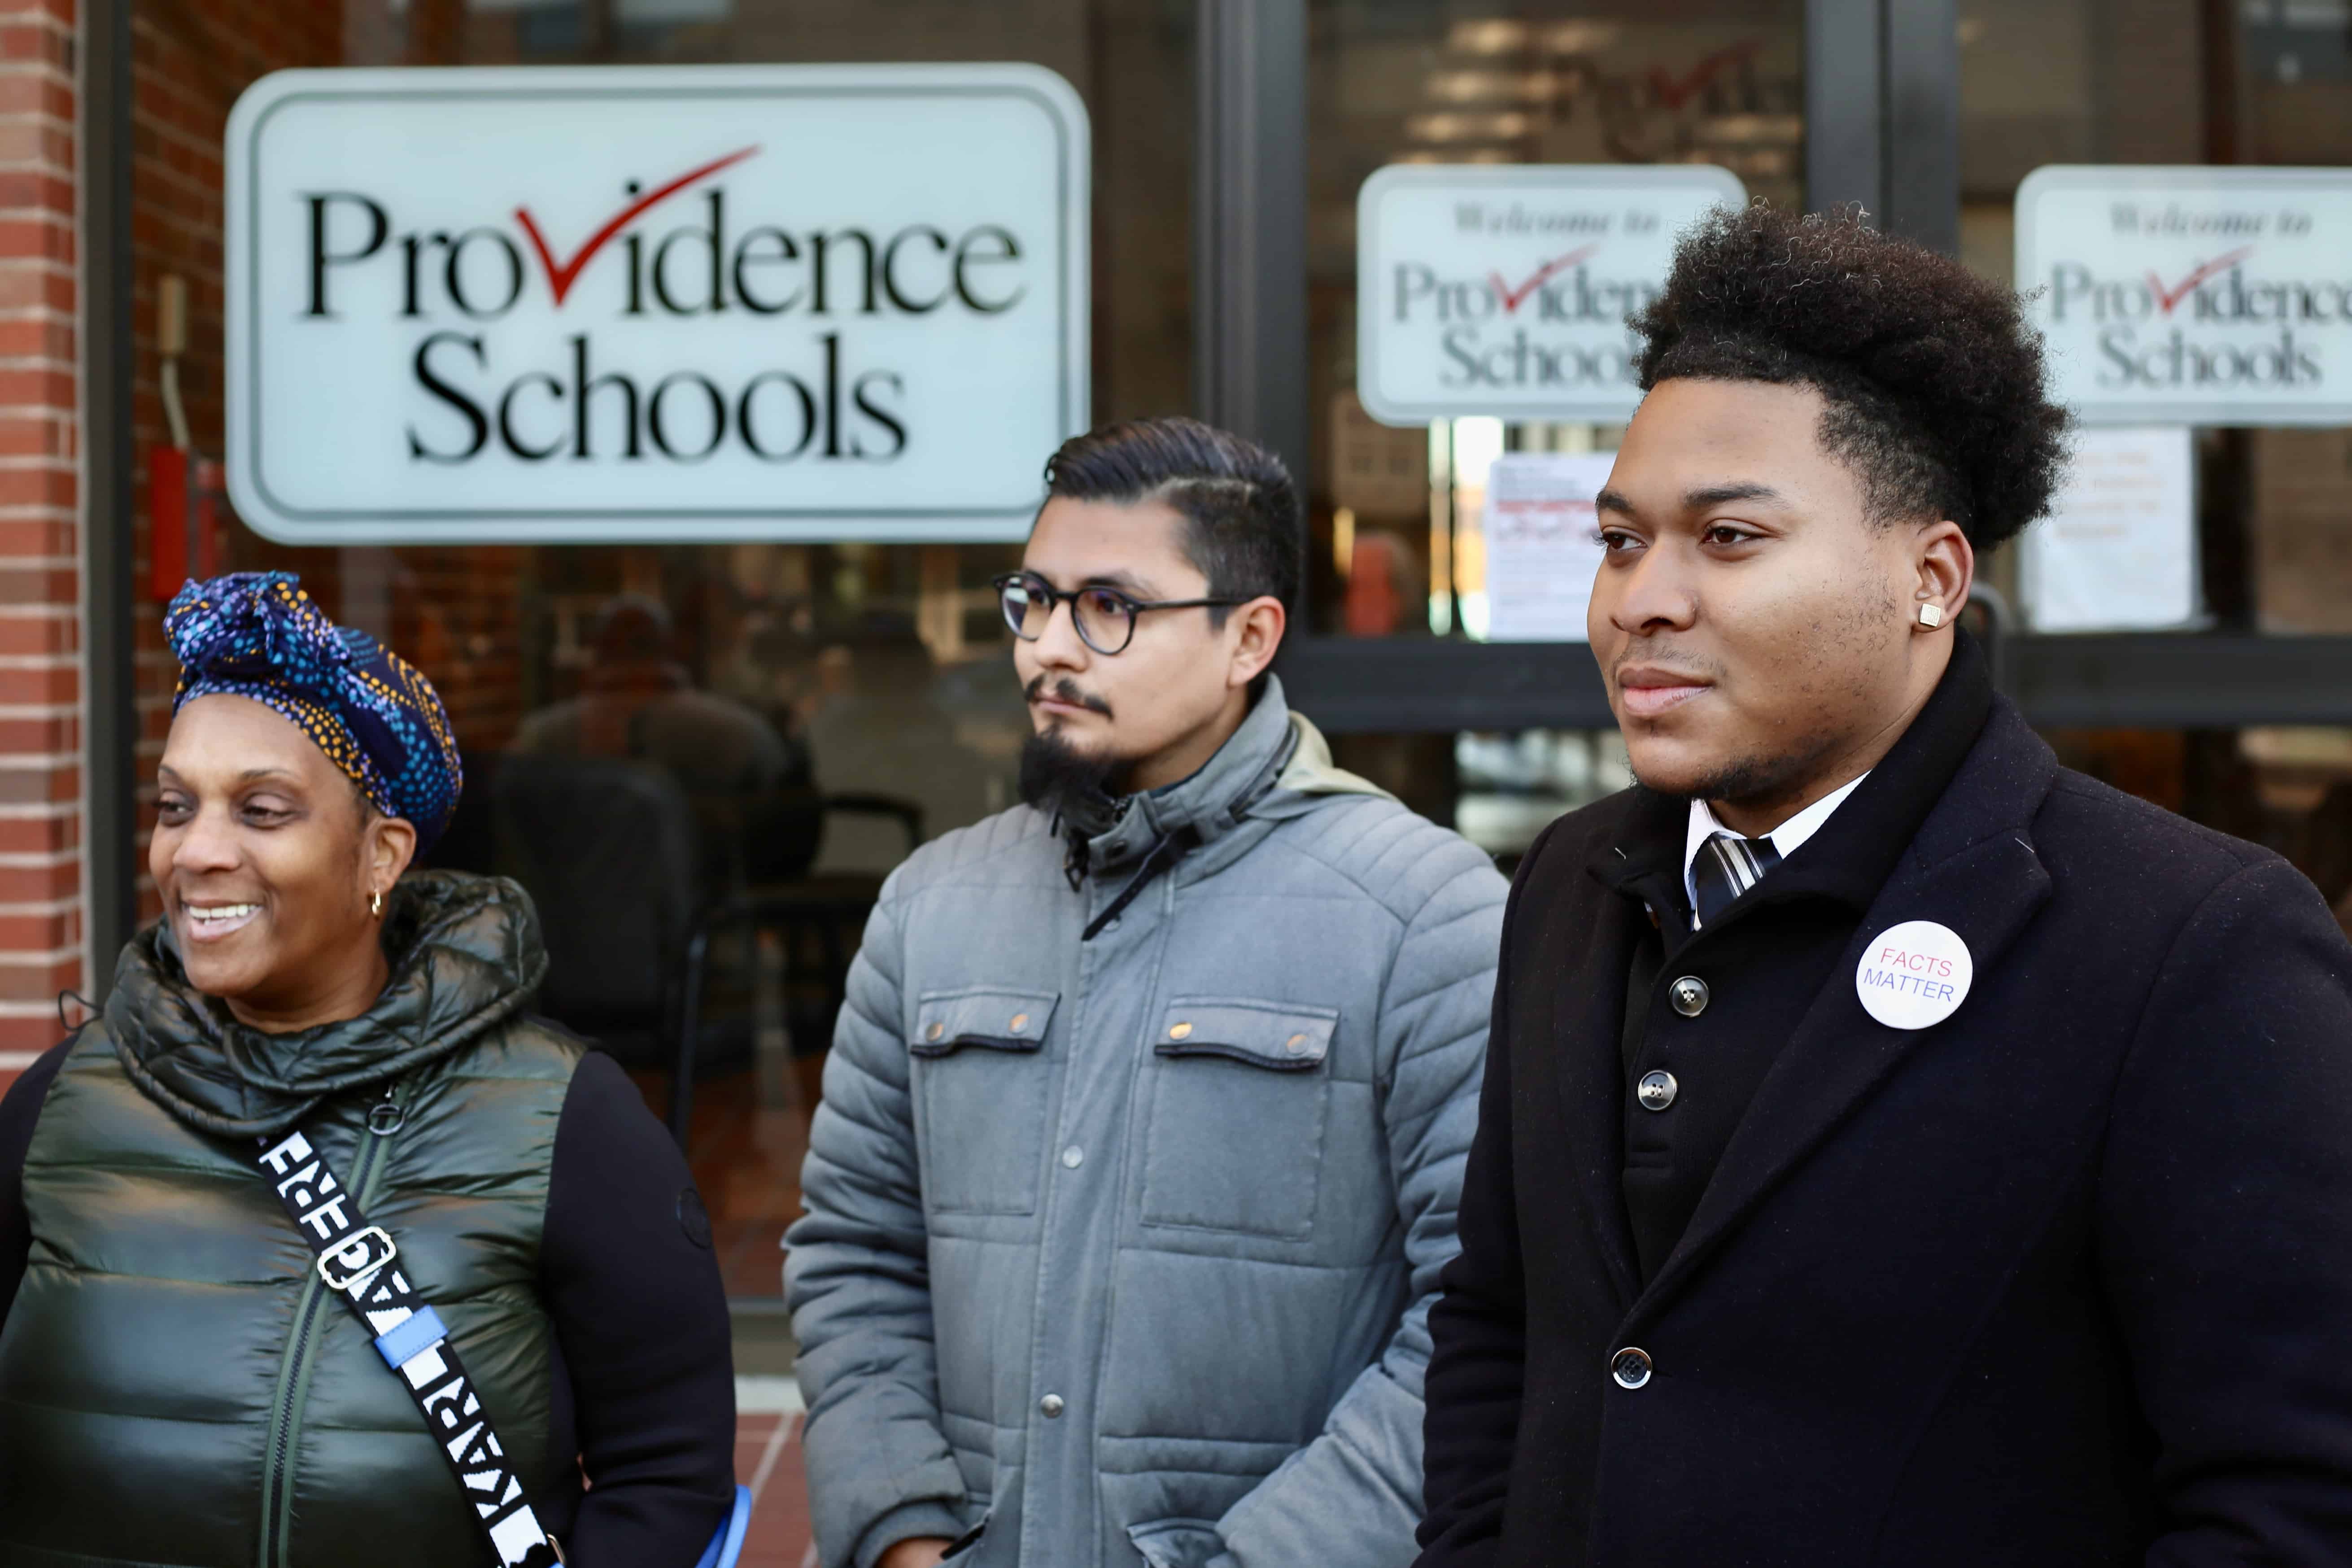 Rhode Island: Community leaders accuse PVD Public Schools of retaliation and discrimination